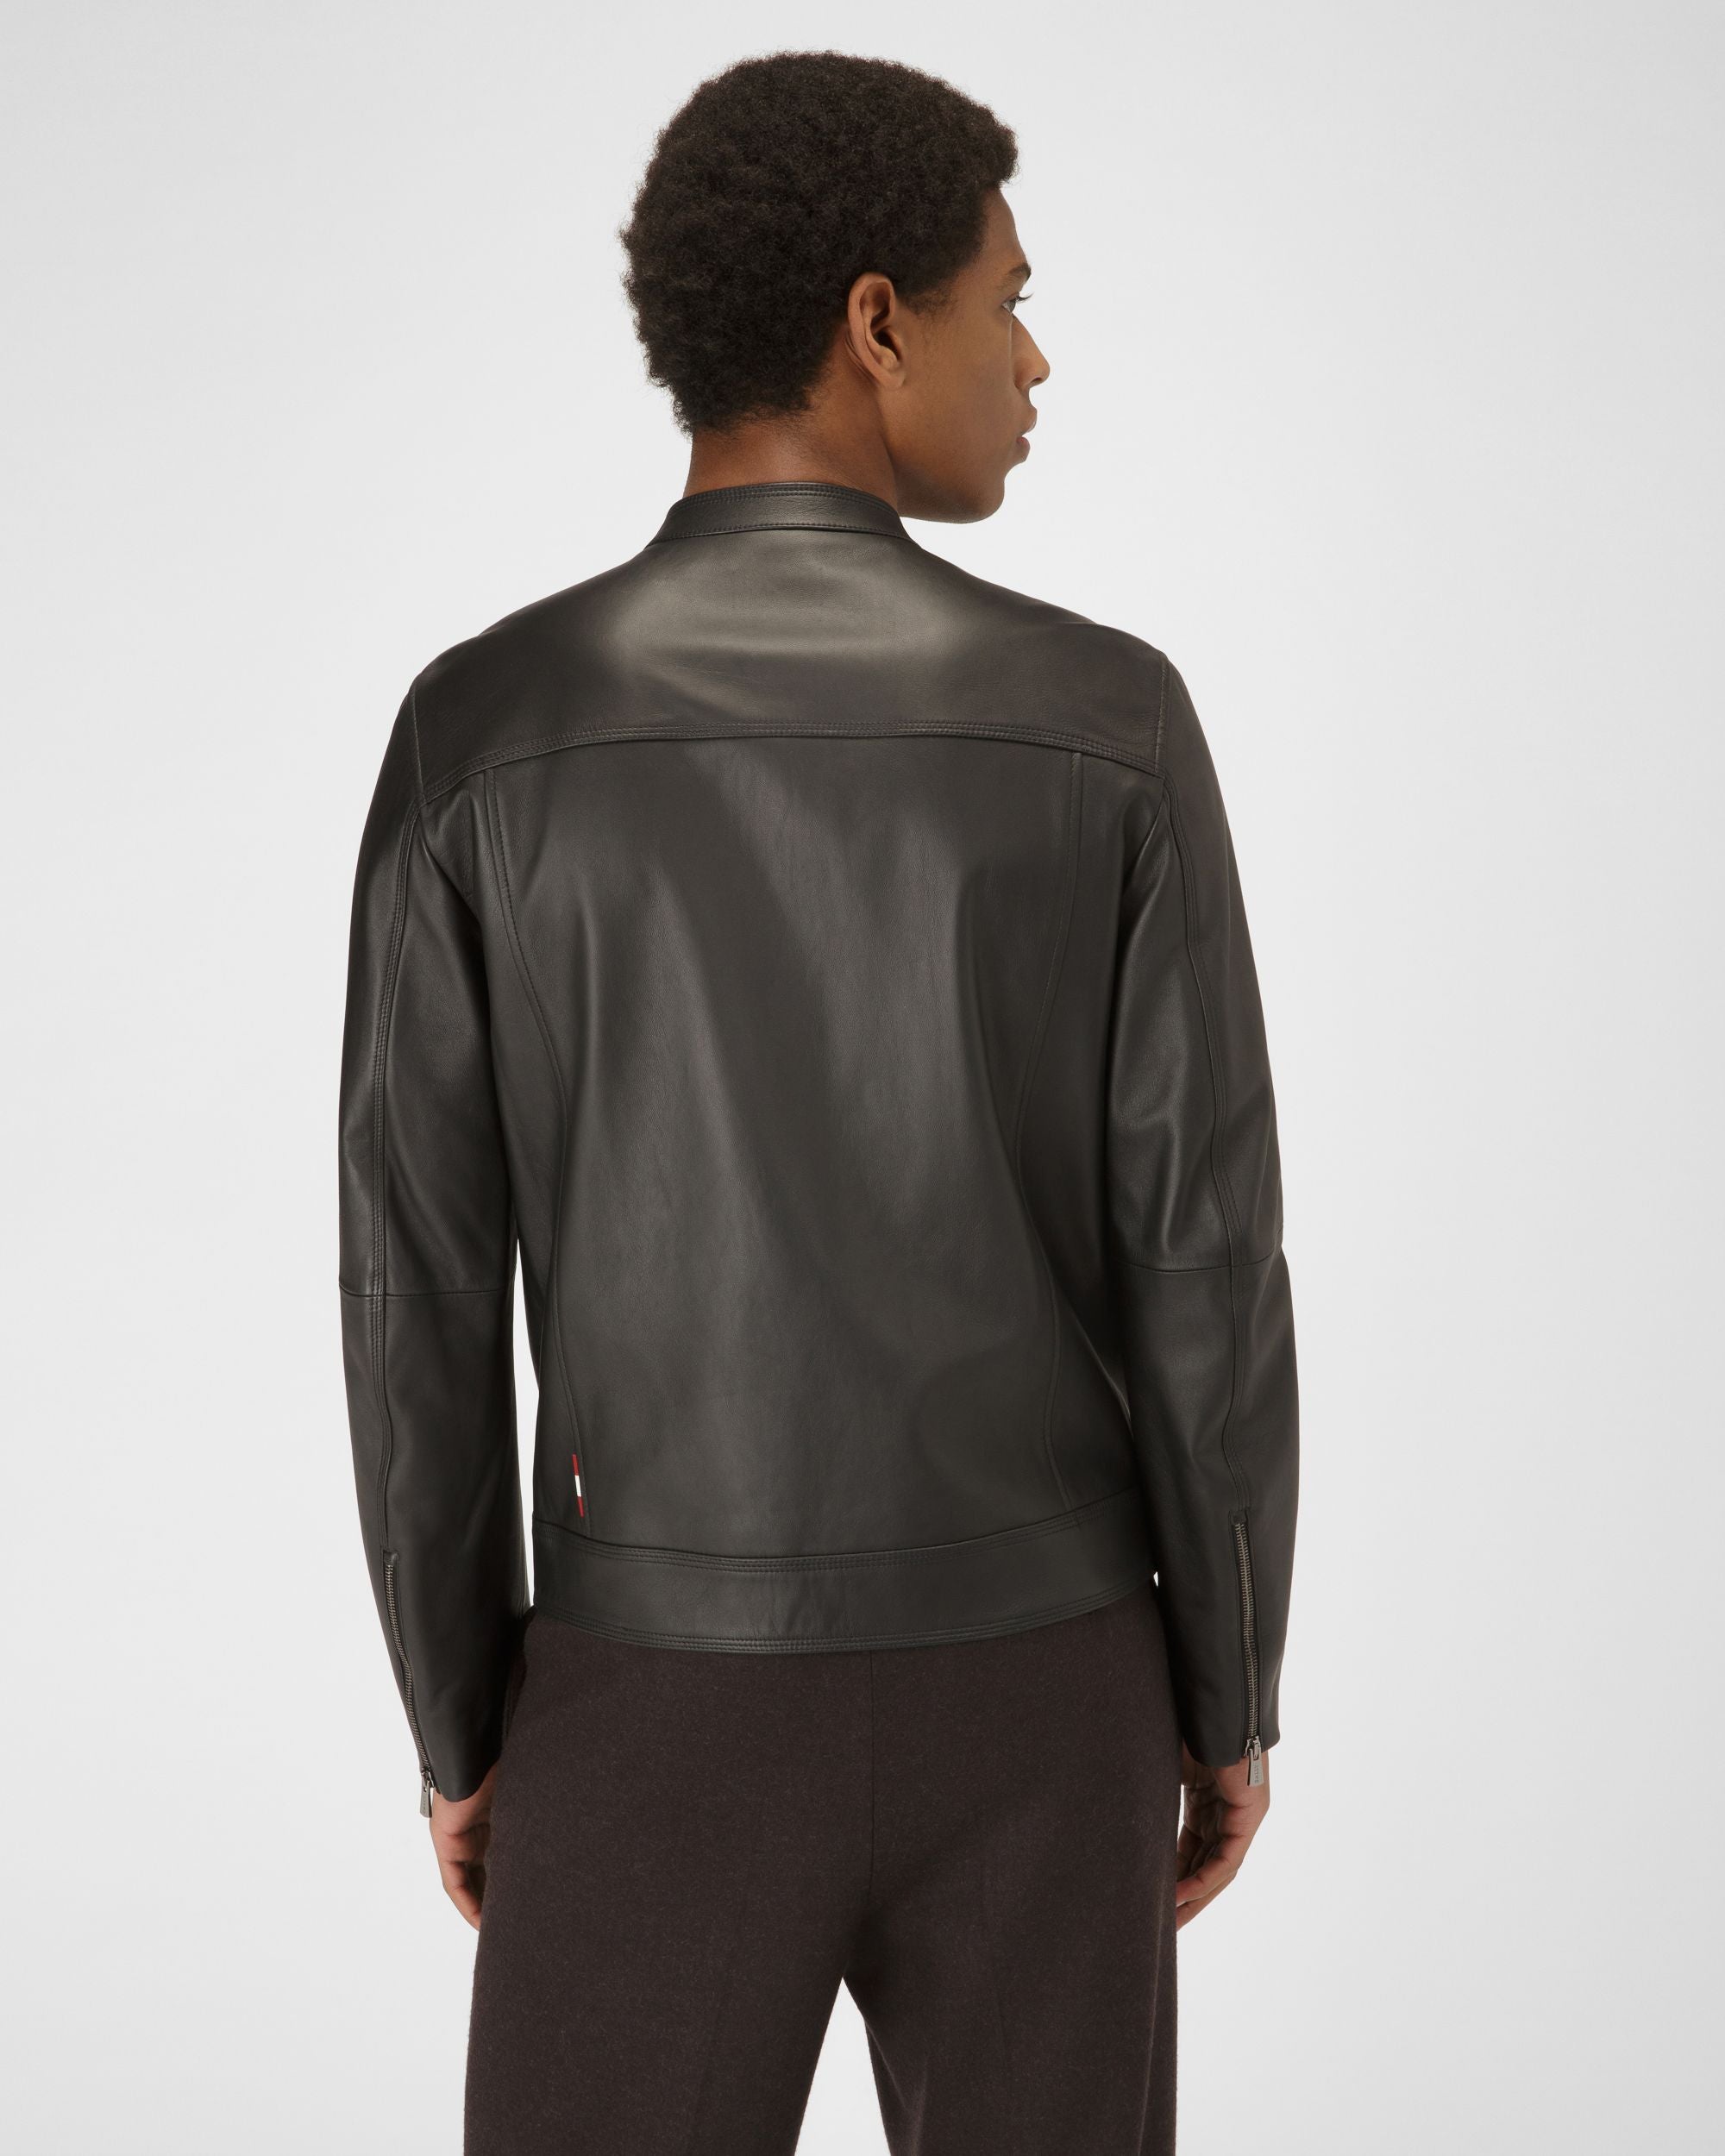 High Neck Blouson | Men's Outerwear | Black Leather | Bally